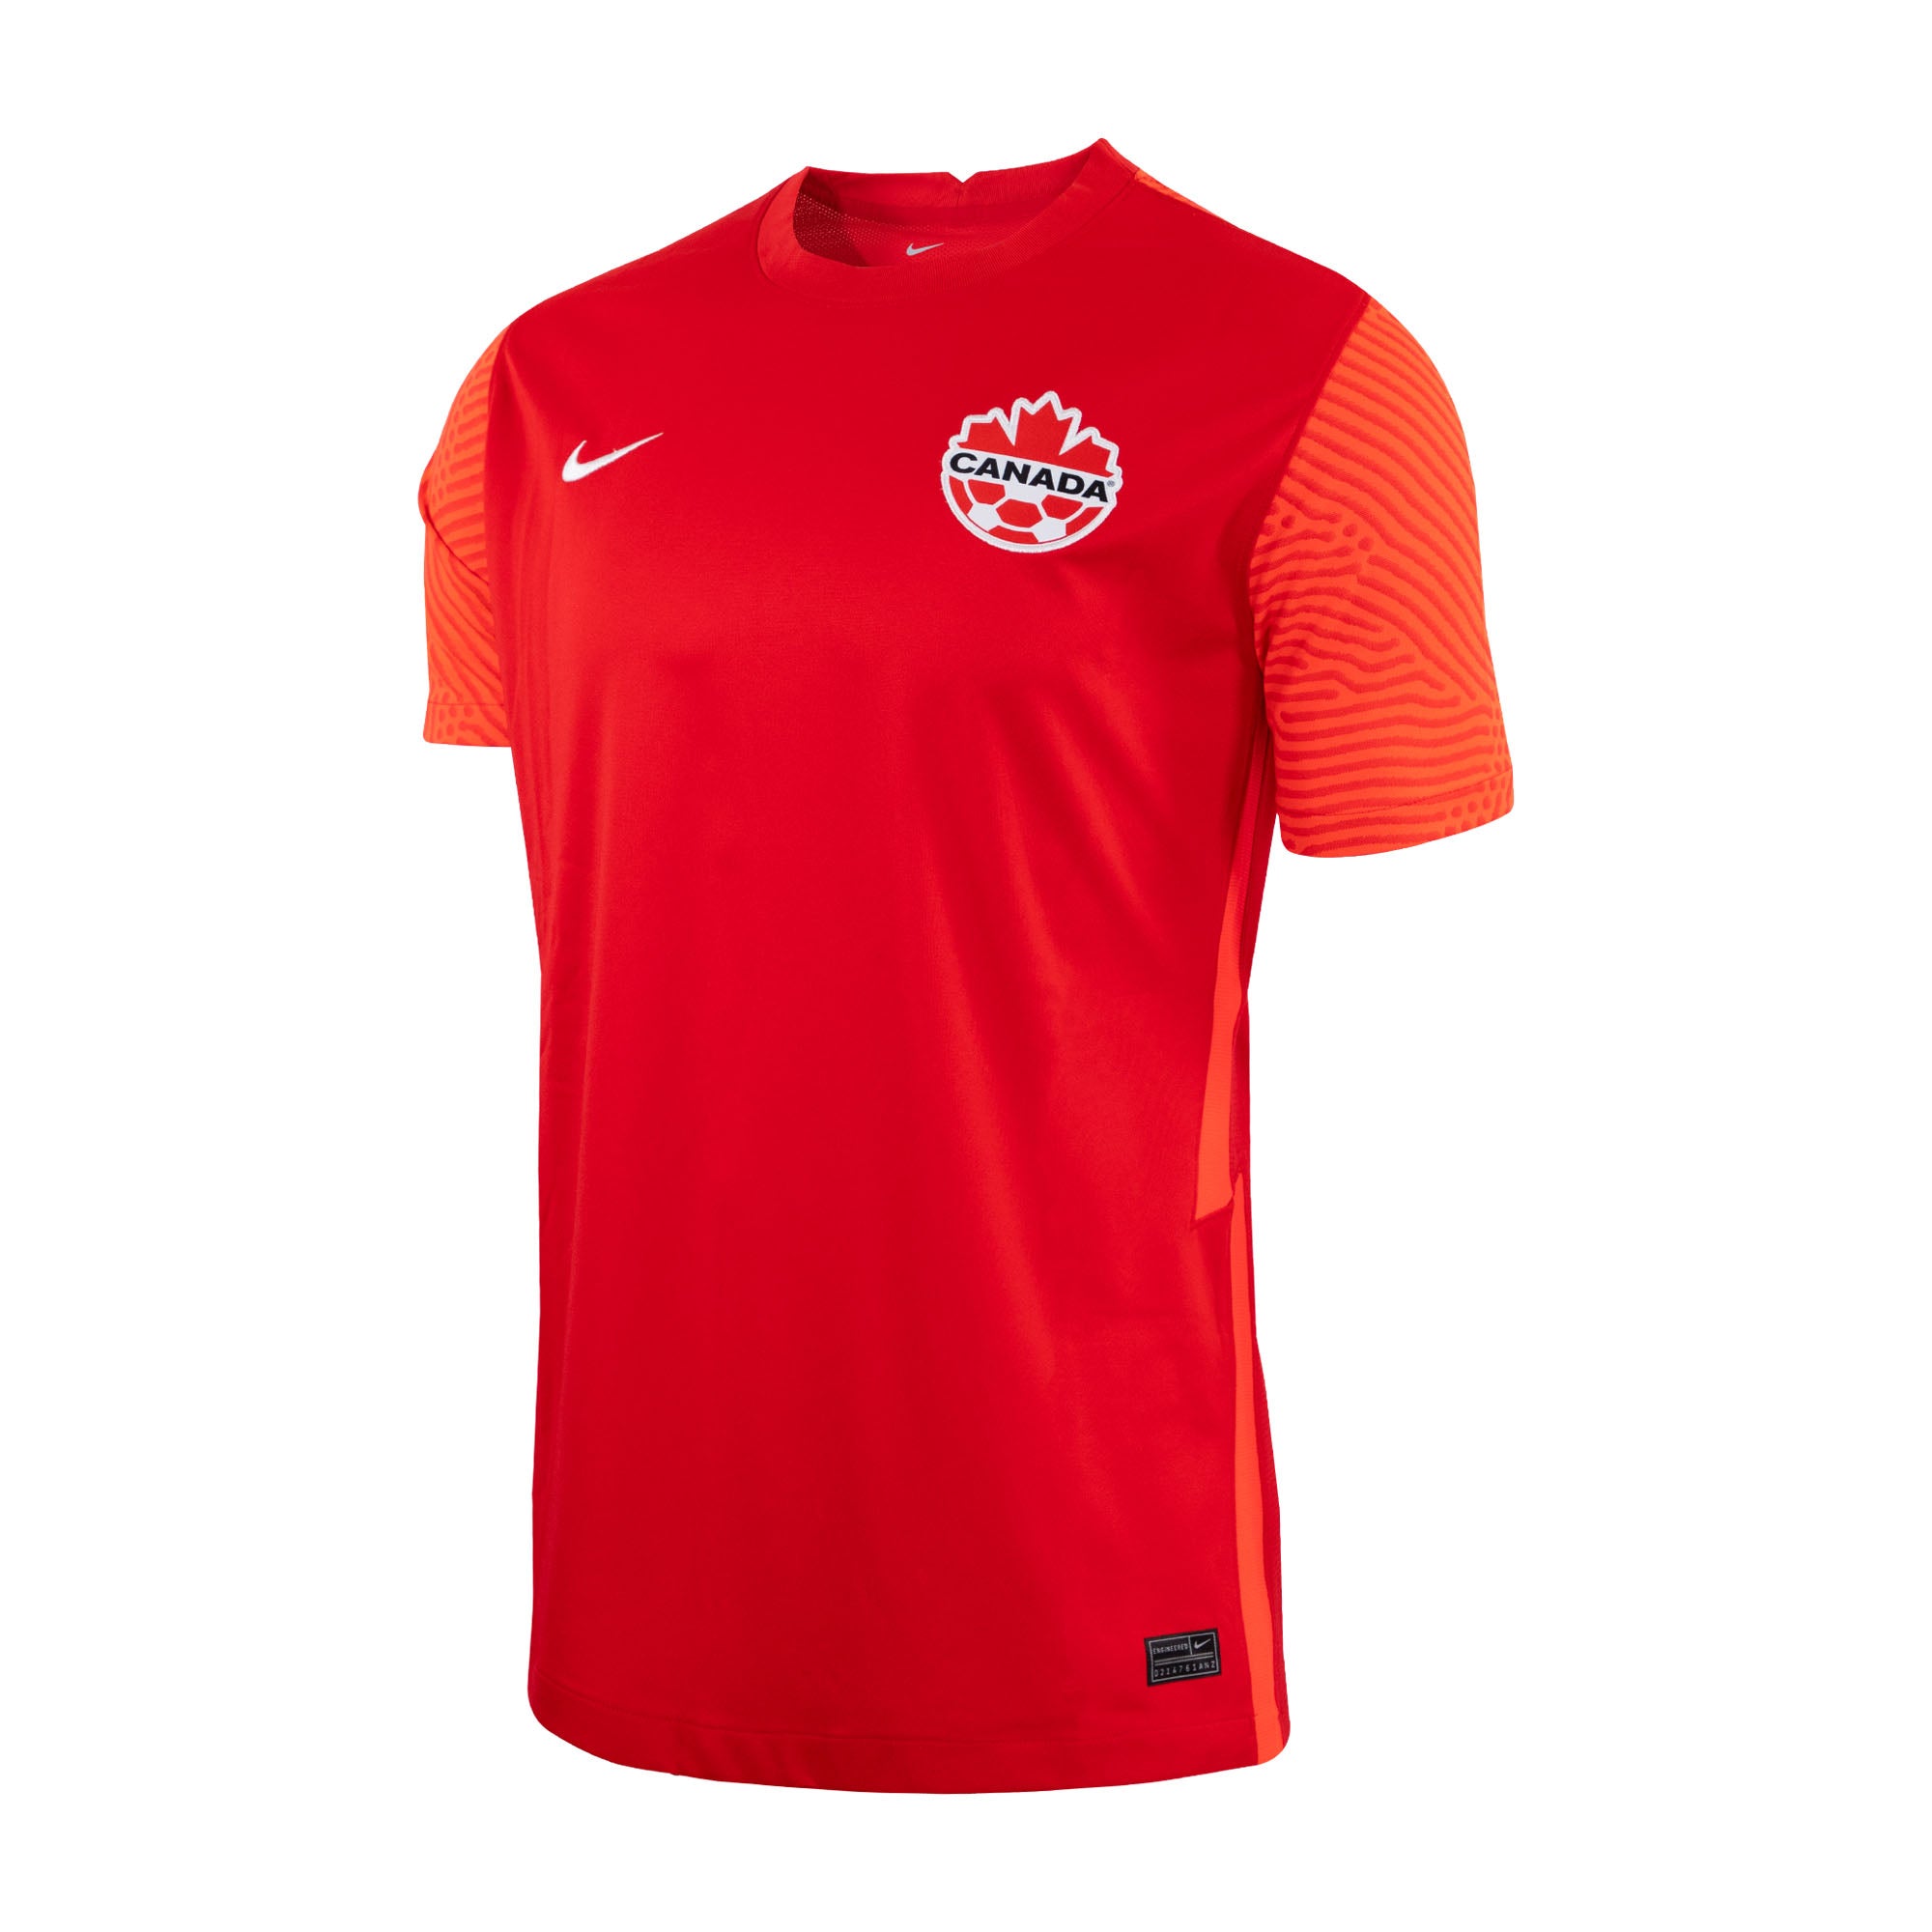 Canada Soccer Men's Nike Replica National Team Jersey shop.realsports